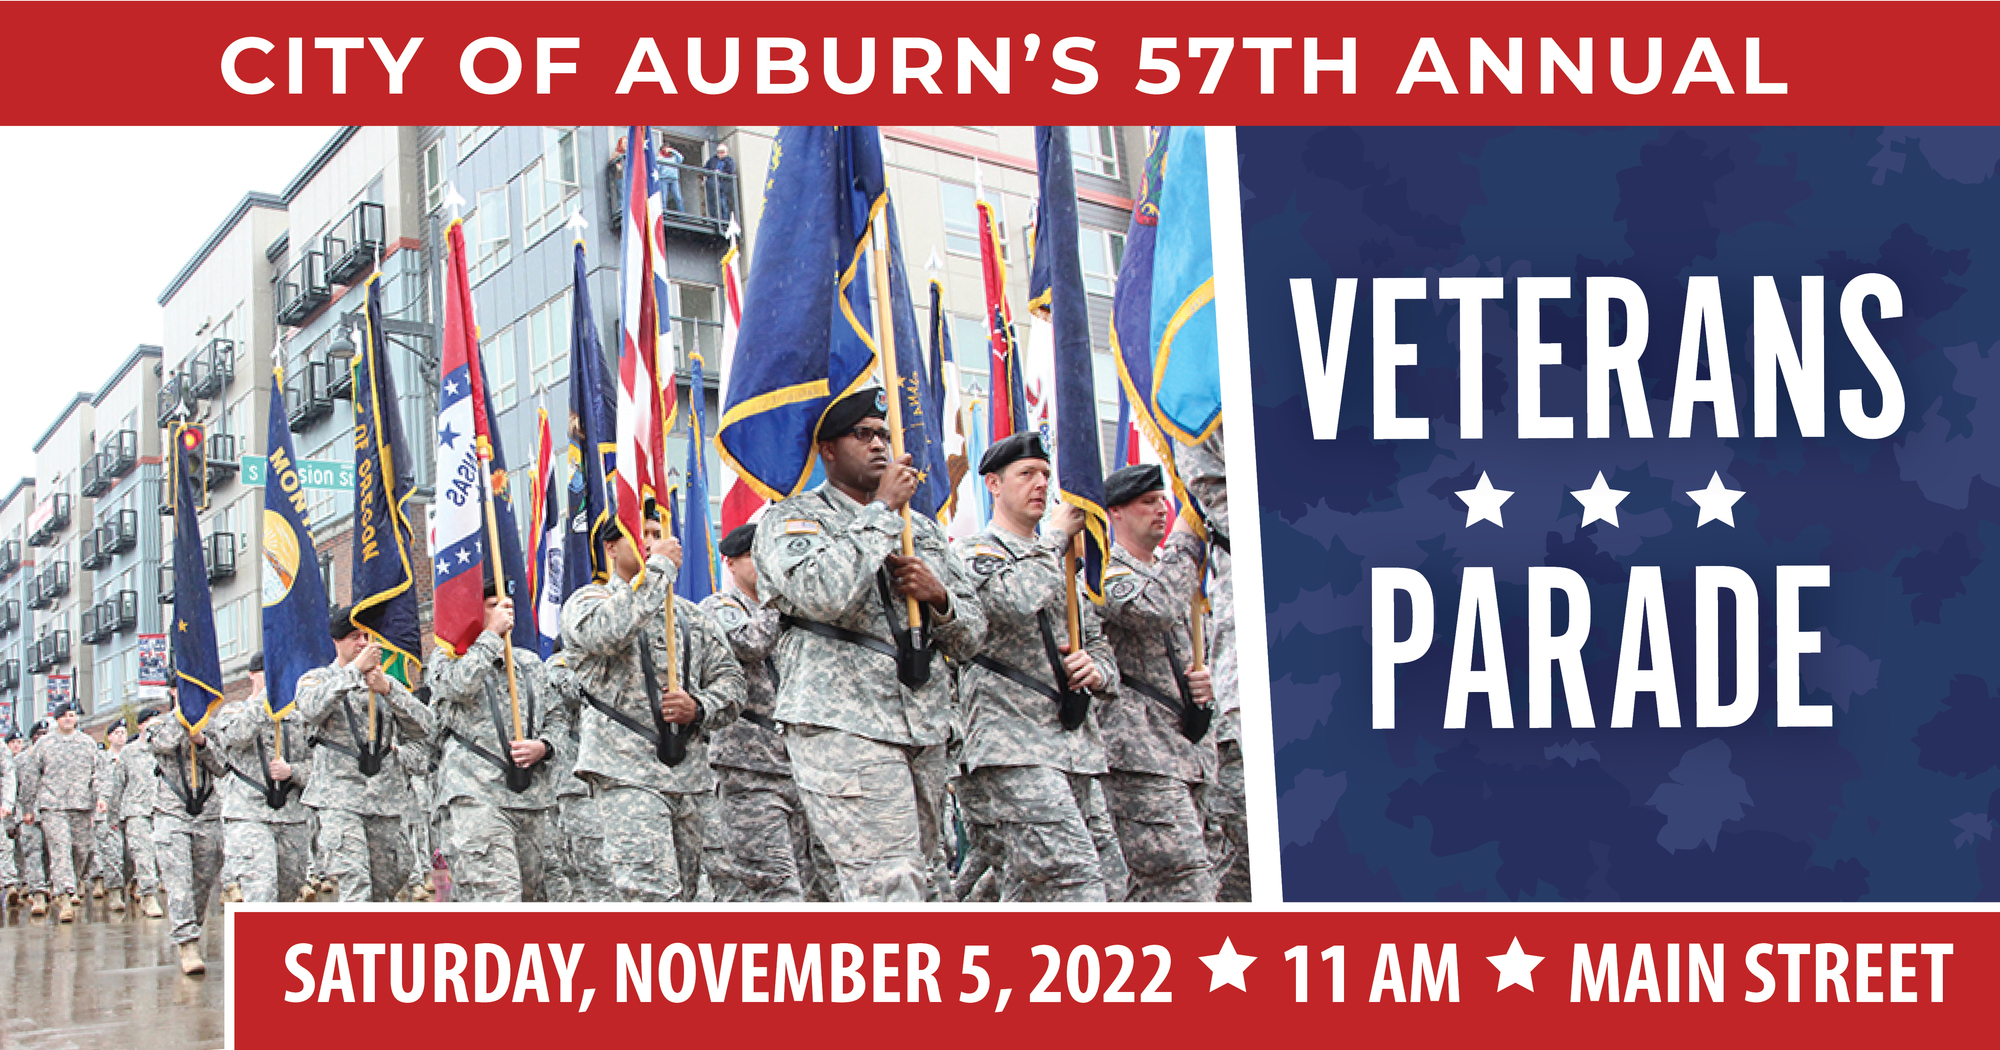 Auburn's VETERANS PARADE returns Saturday, November 5!